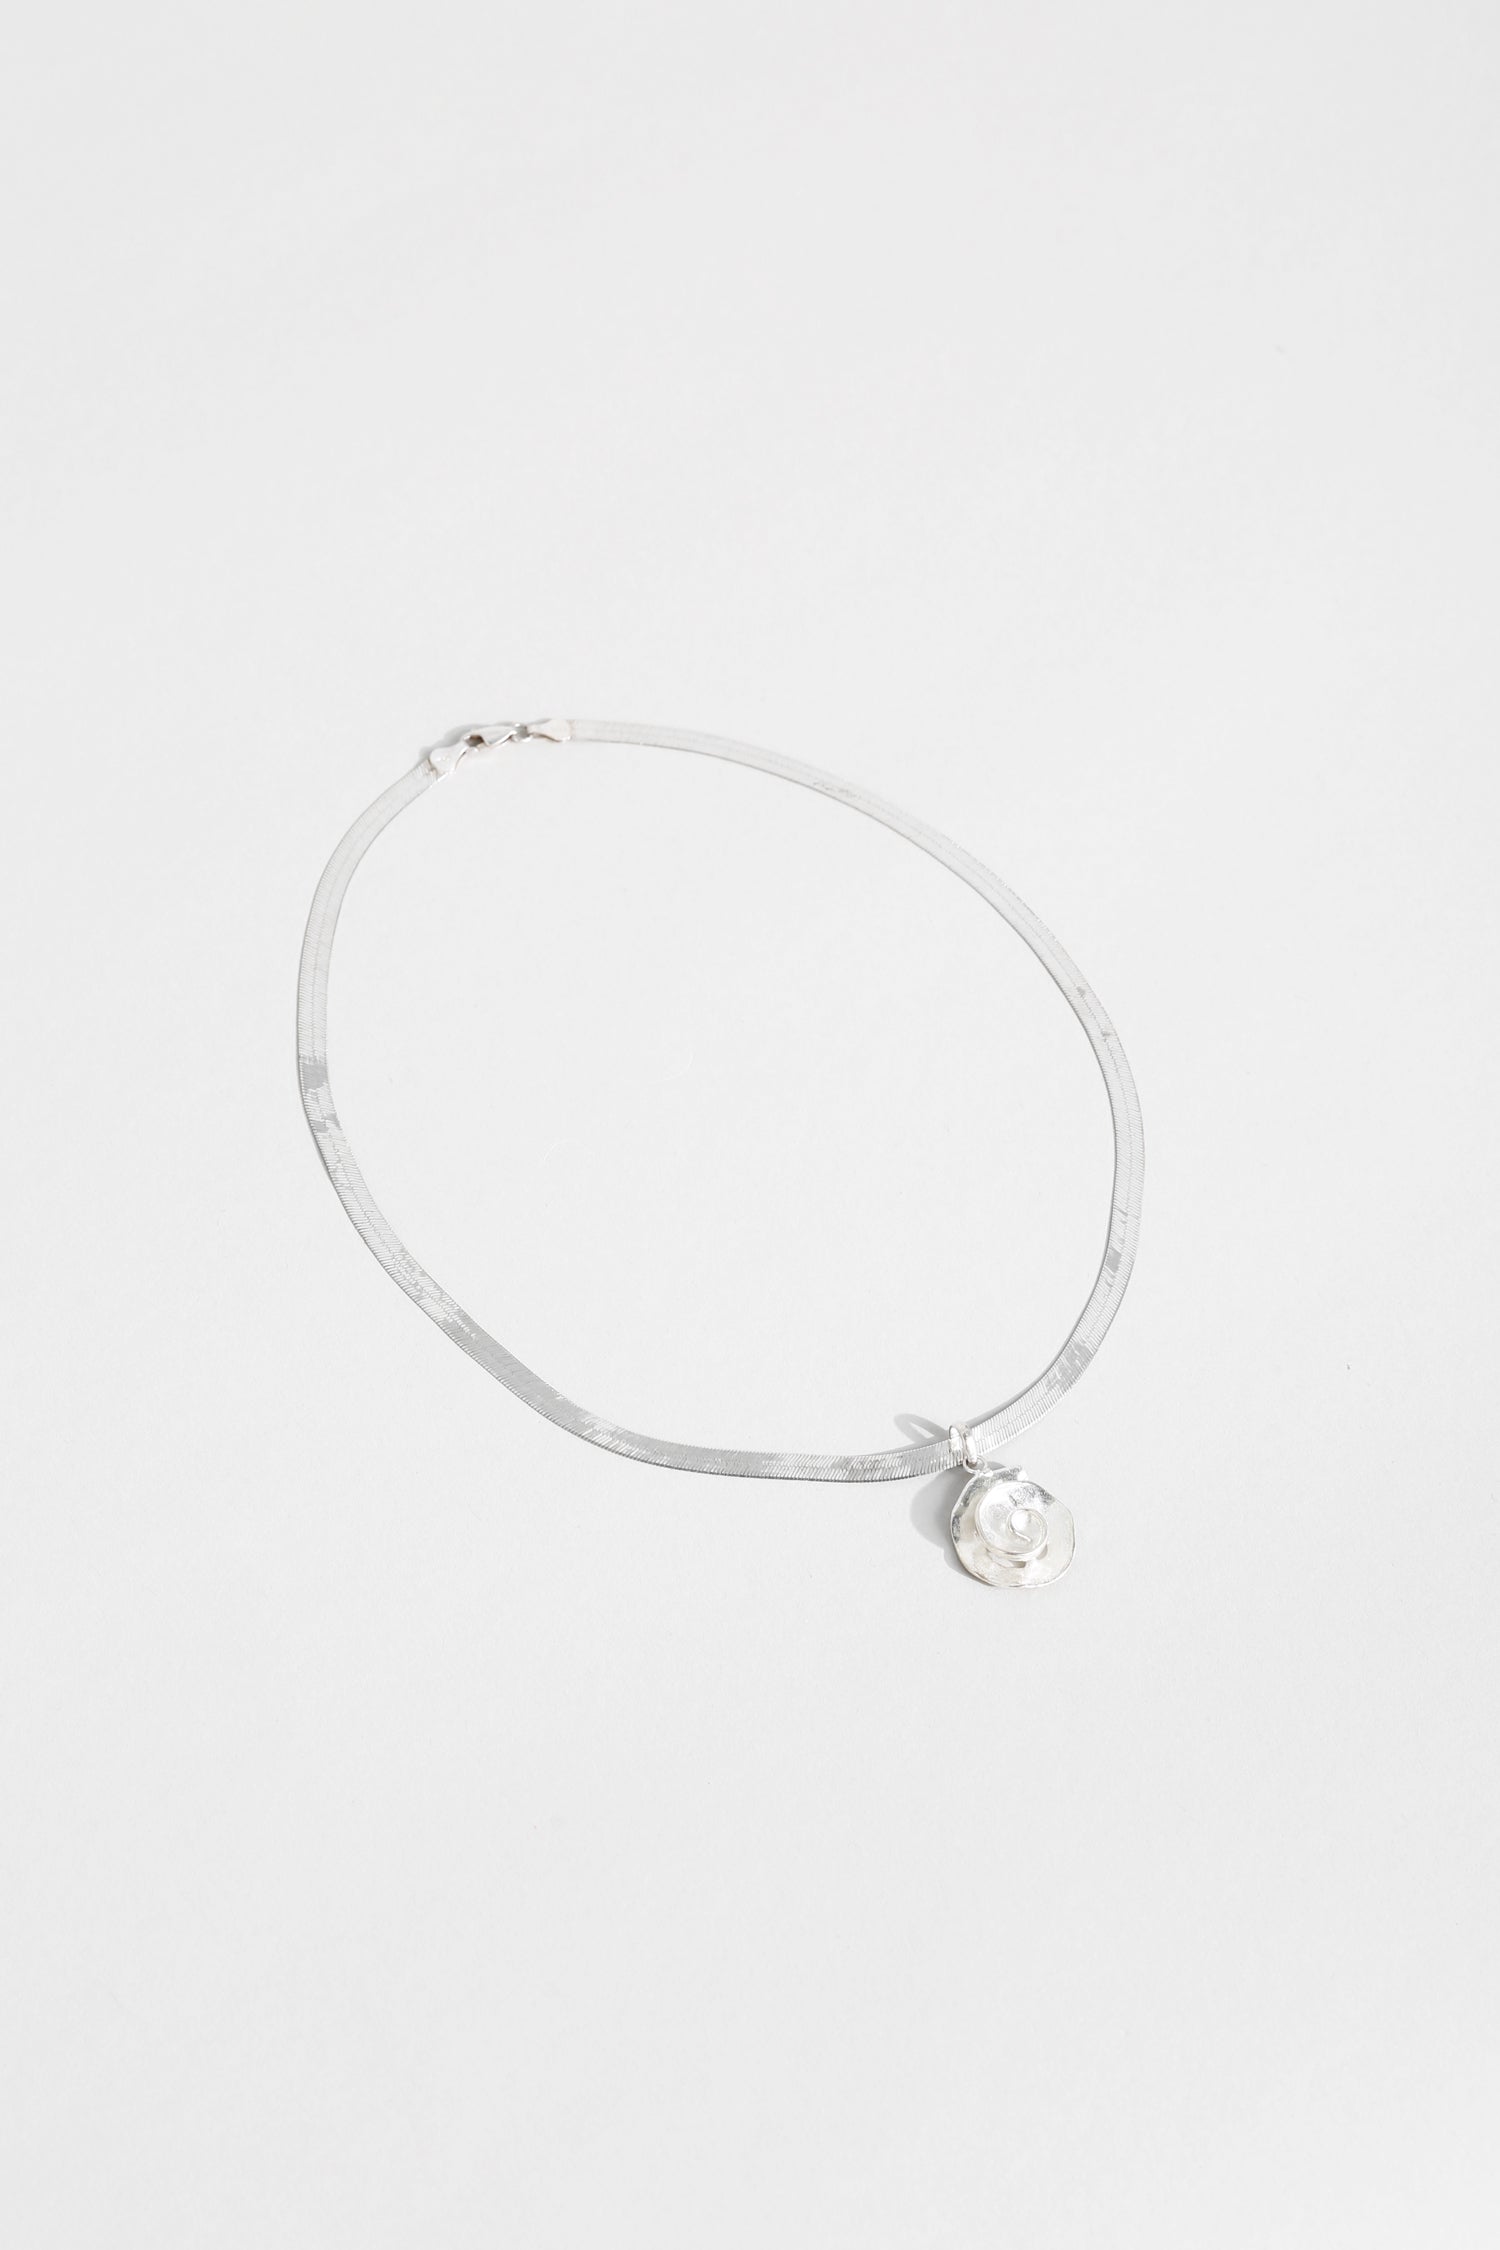 Spiral Herringbone Necklace